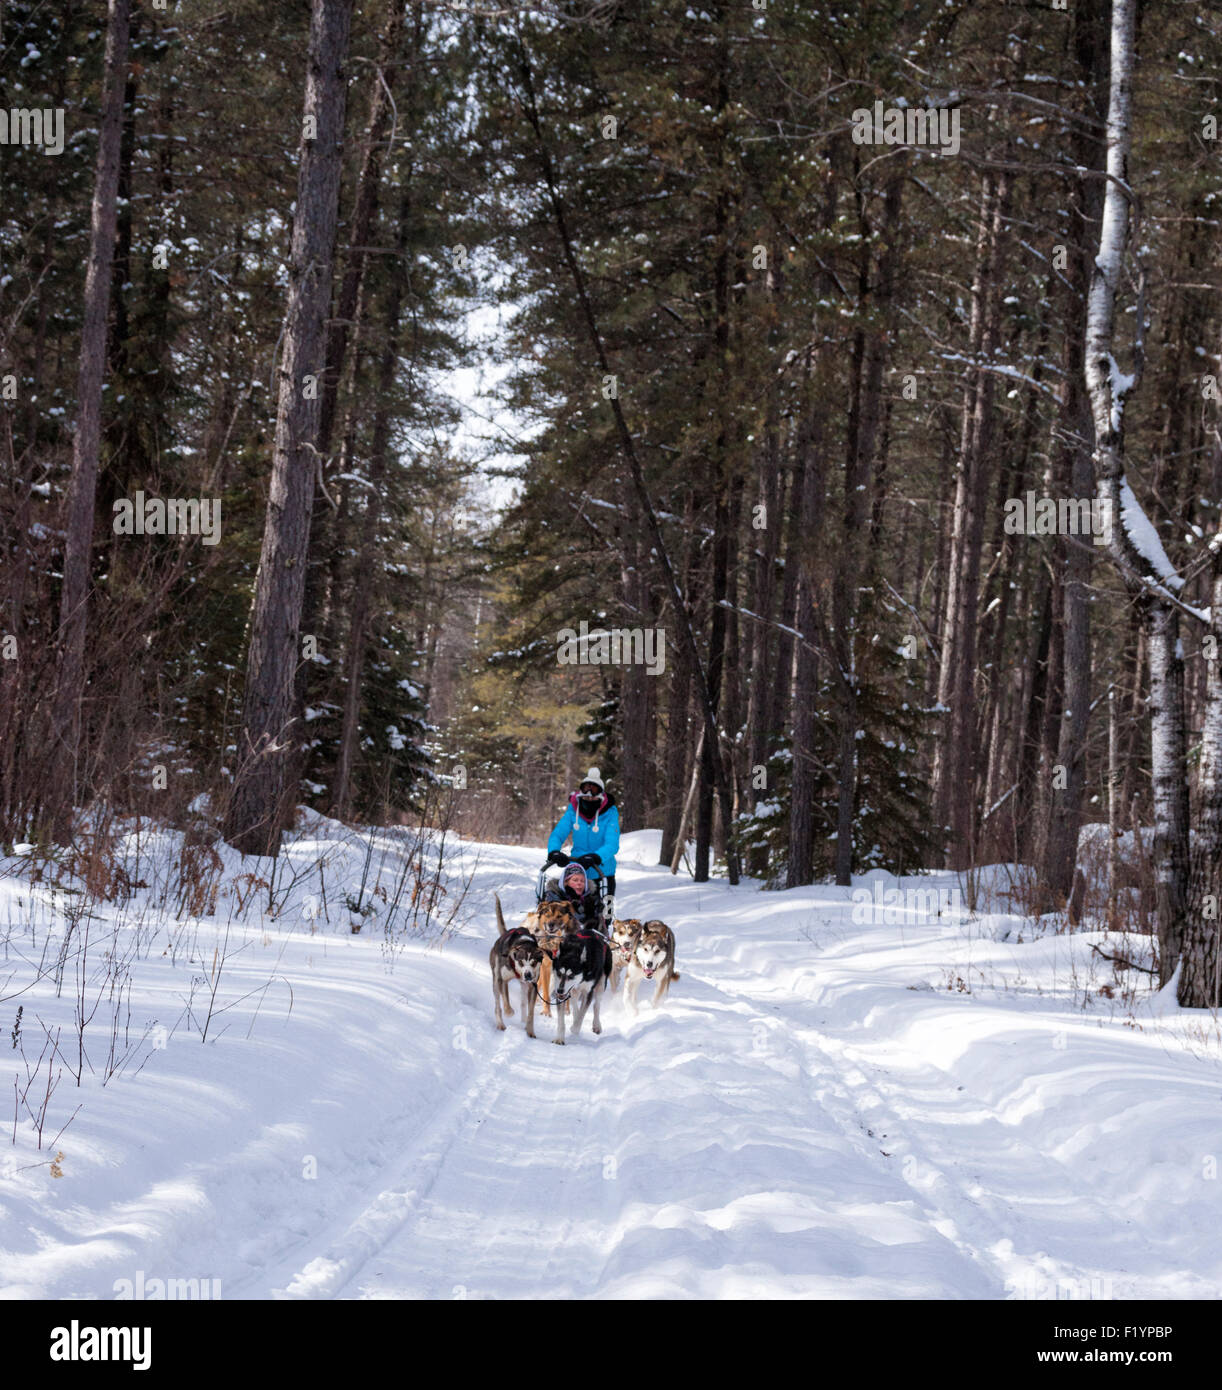 Woman leads a team of huskies dog sledding through snow, Ely, Minnesota, USA Stock Photo